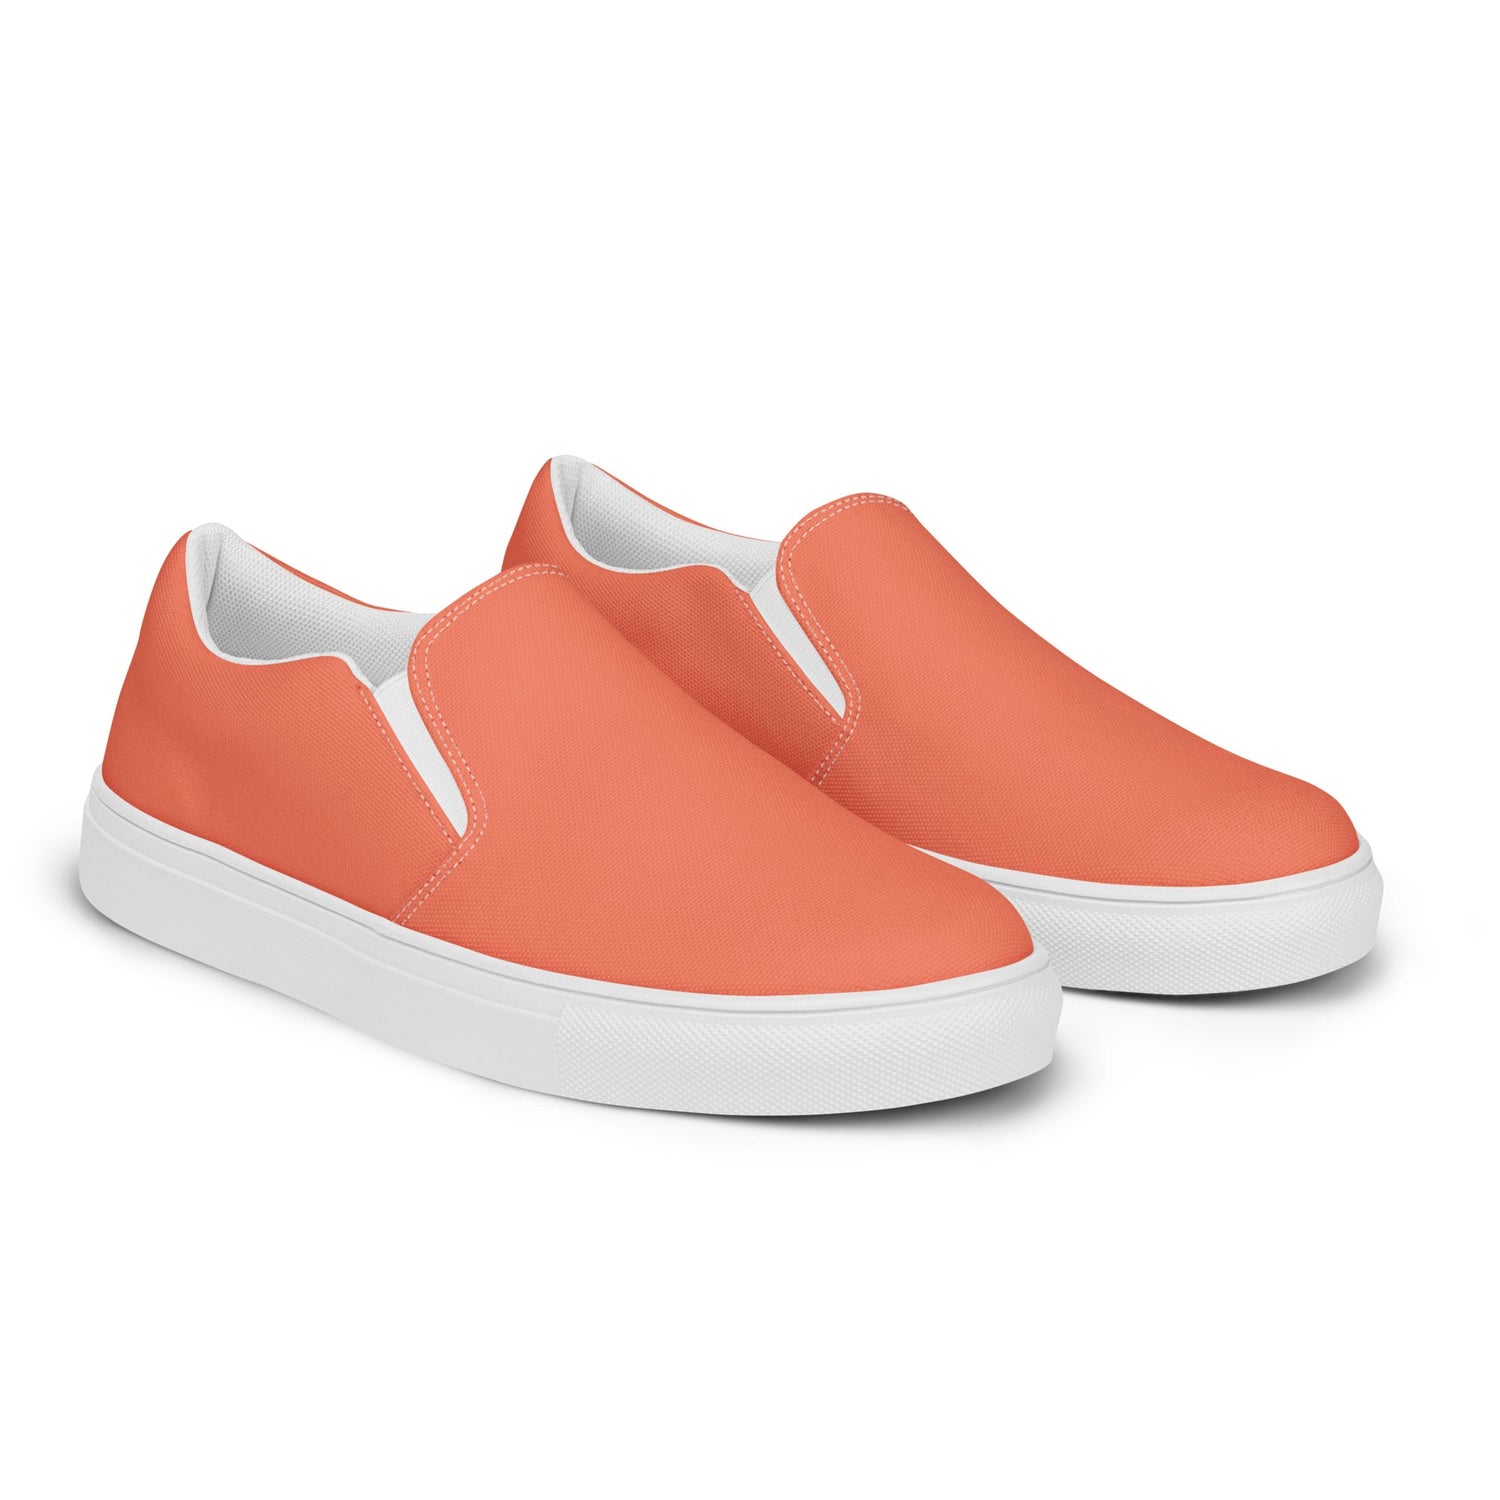 klasneakers Women’s slip-on canvas shoes - Salmon